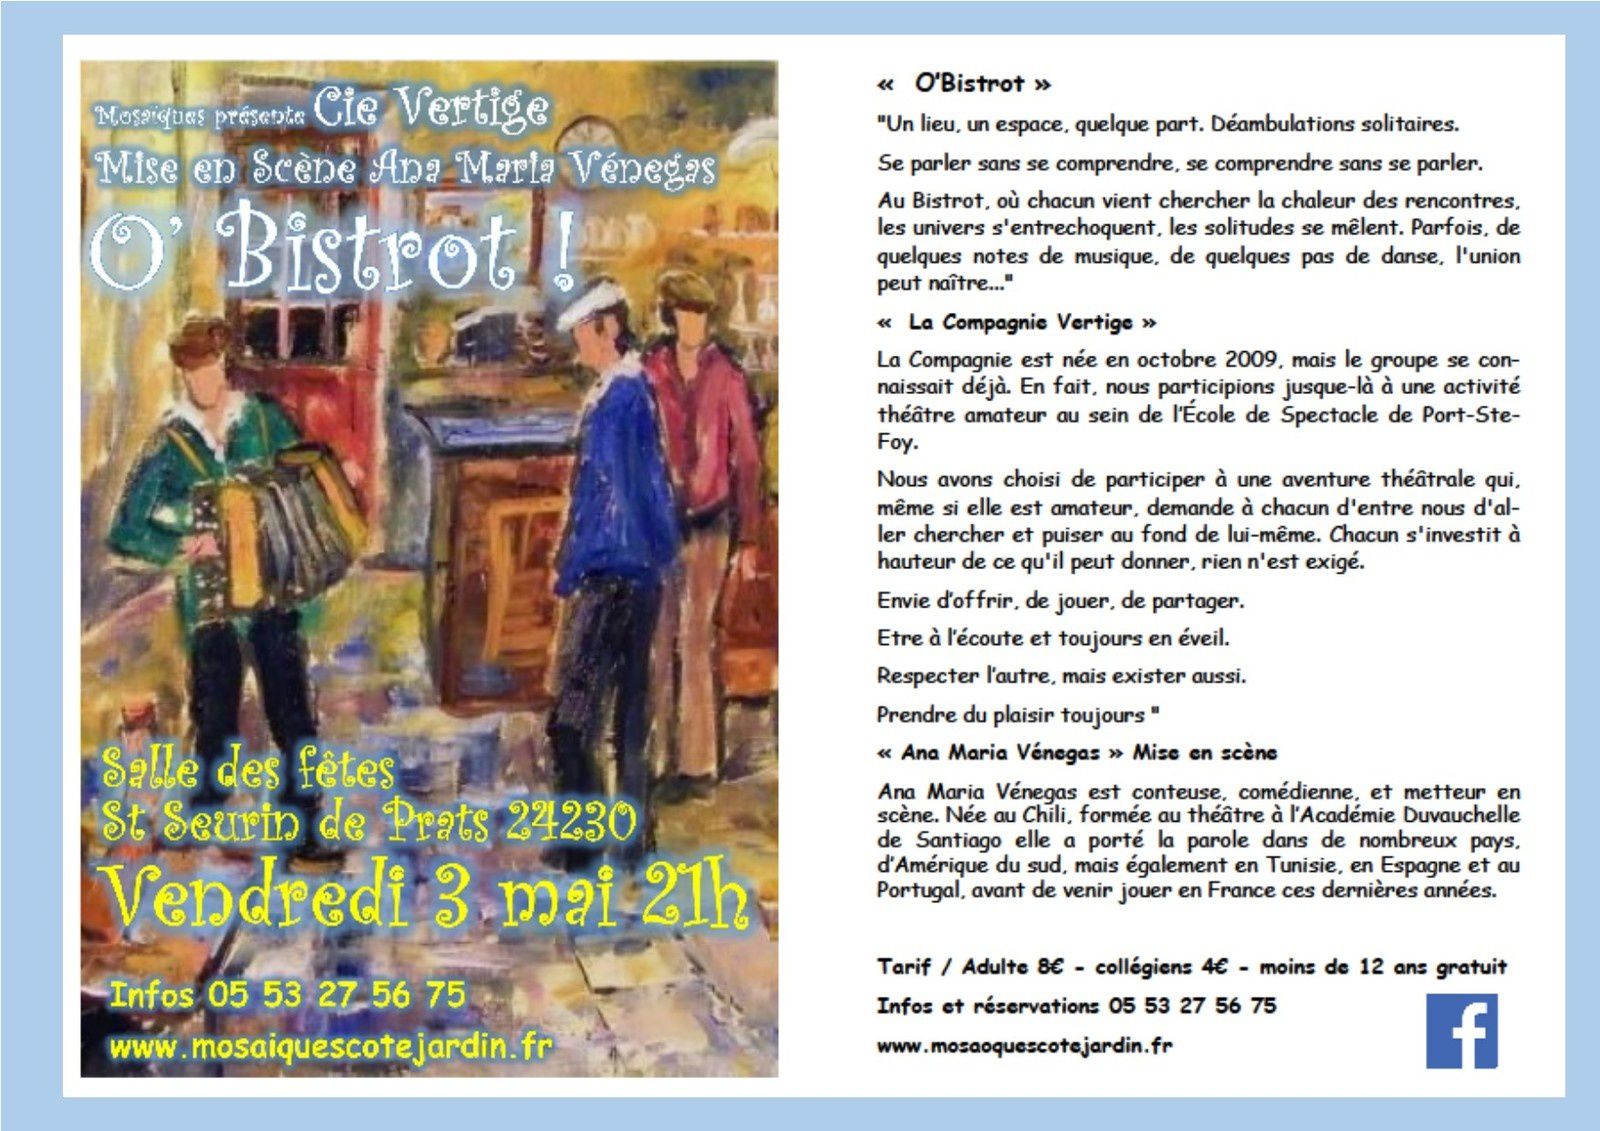 Vendredi 3 Mai à St Seurin de Prats : O' Bistrot de la Compagnie Vertige ! Mise en scène Ana Maria Vénegas.